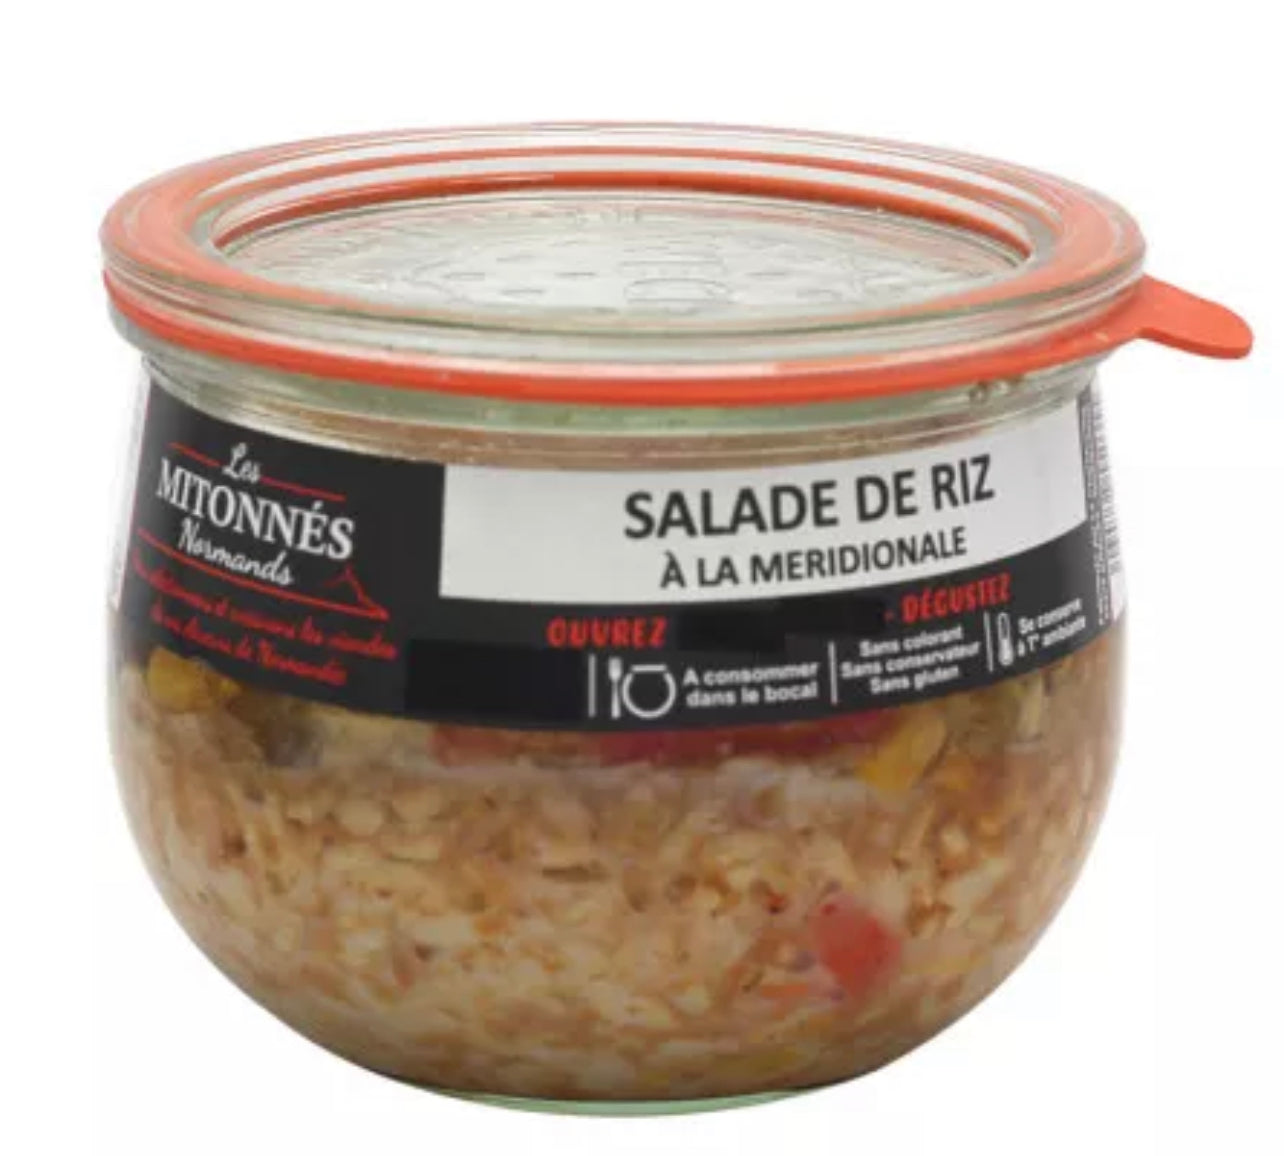 Southern rice salad - 350g